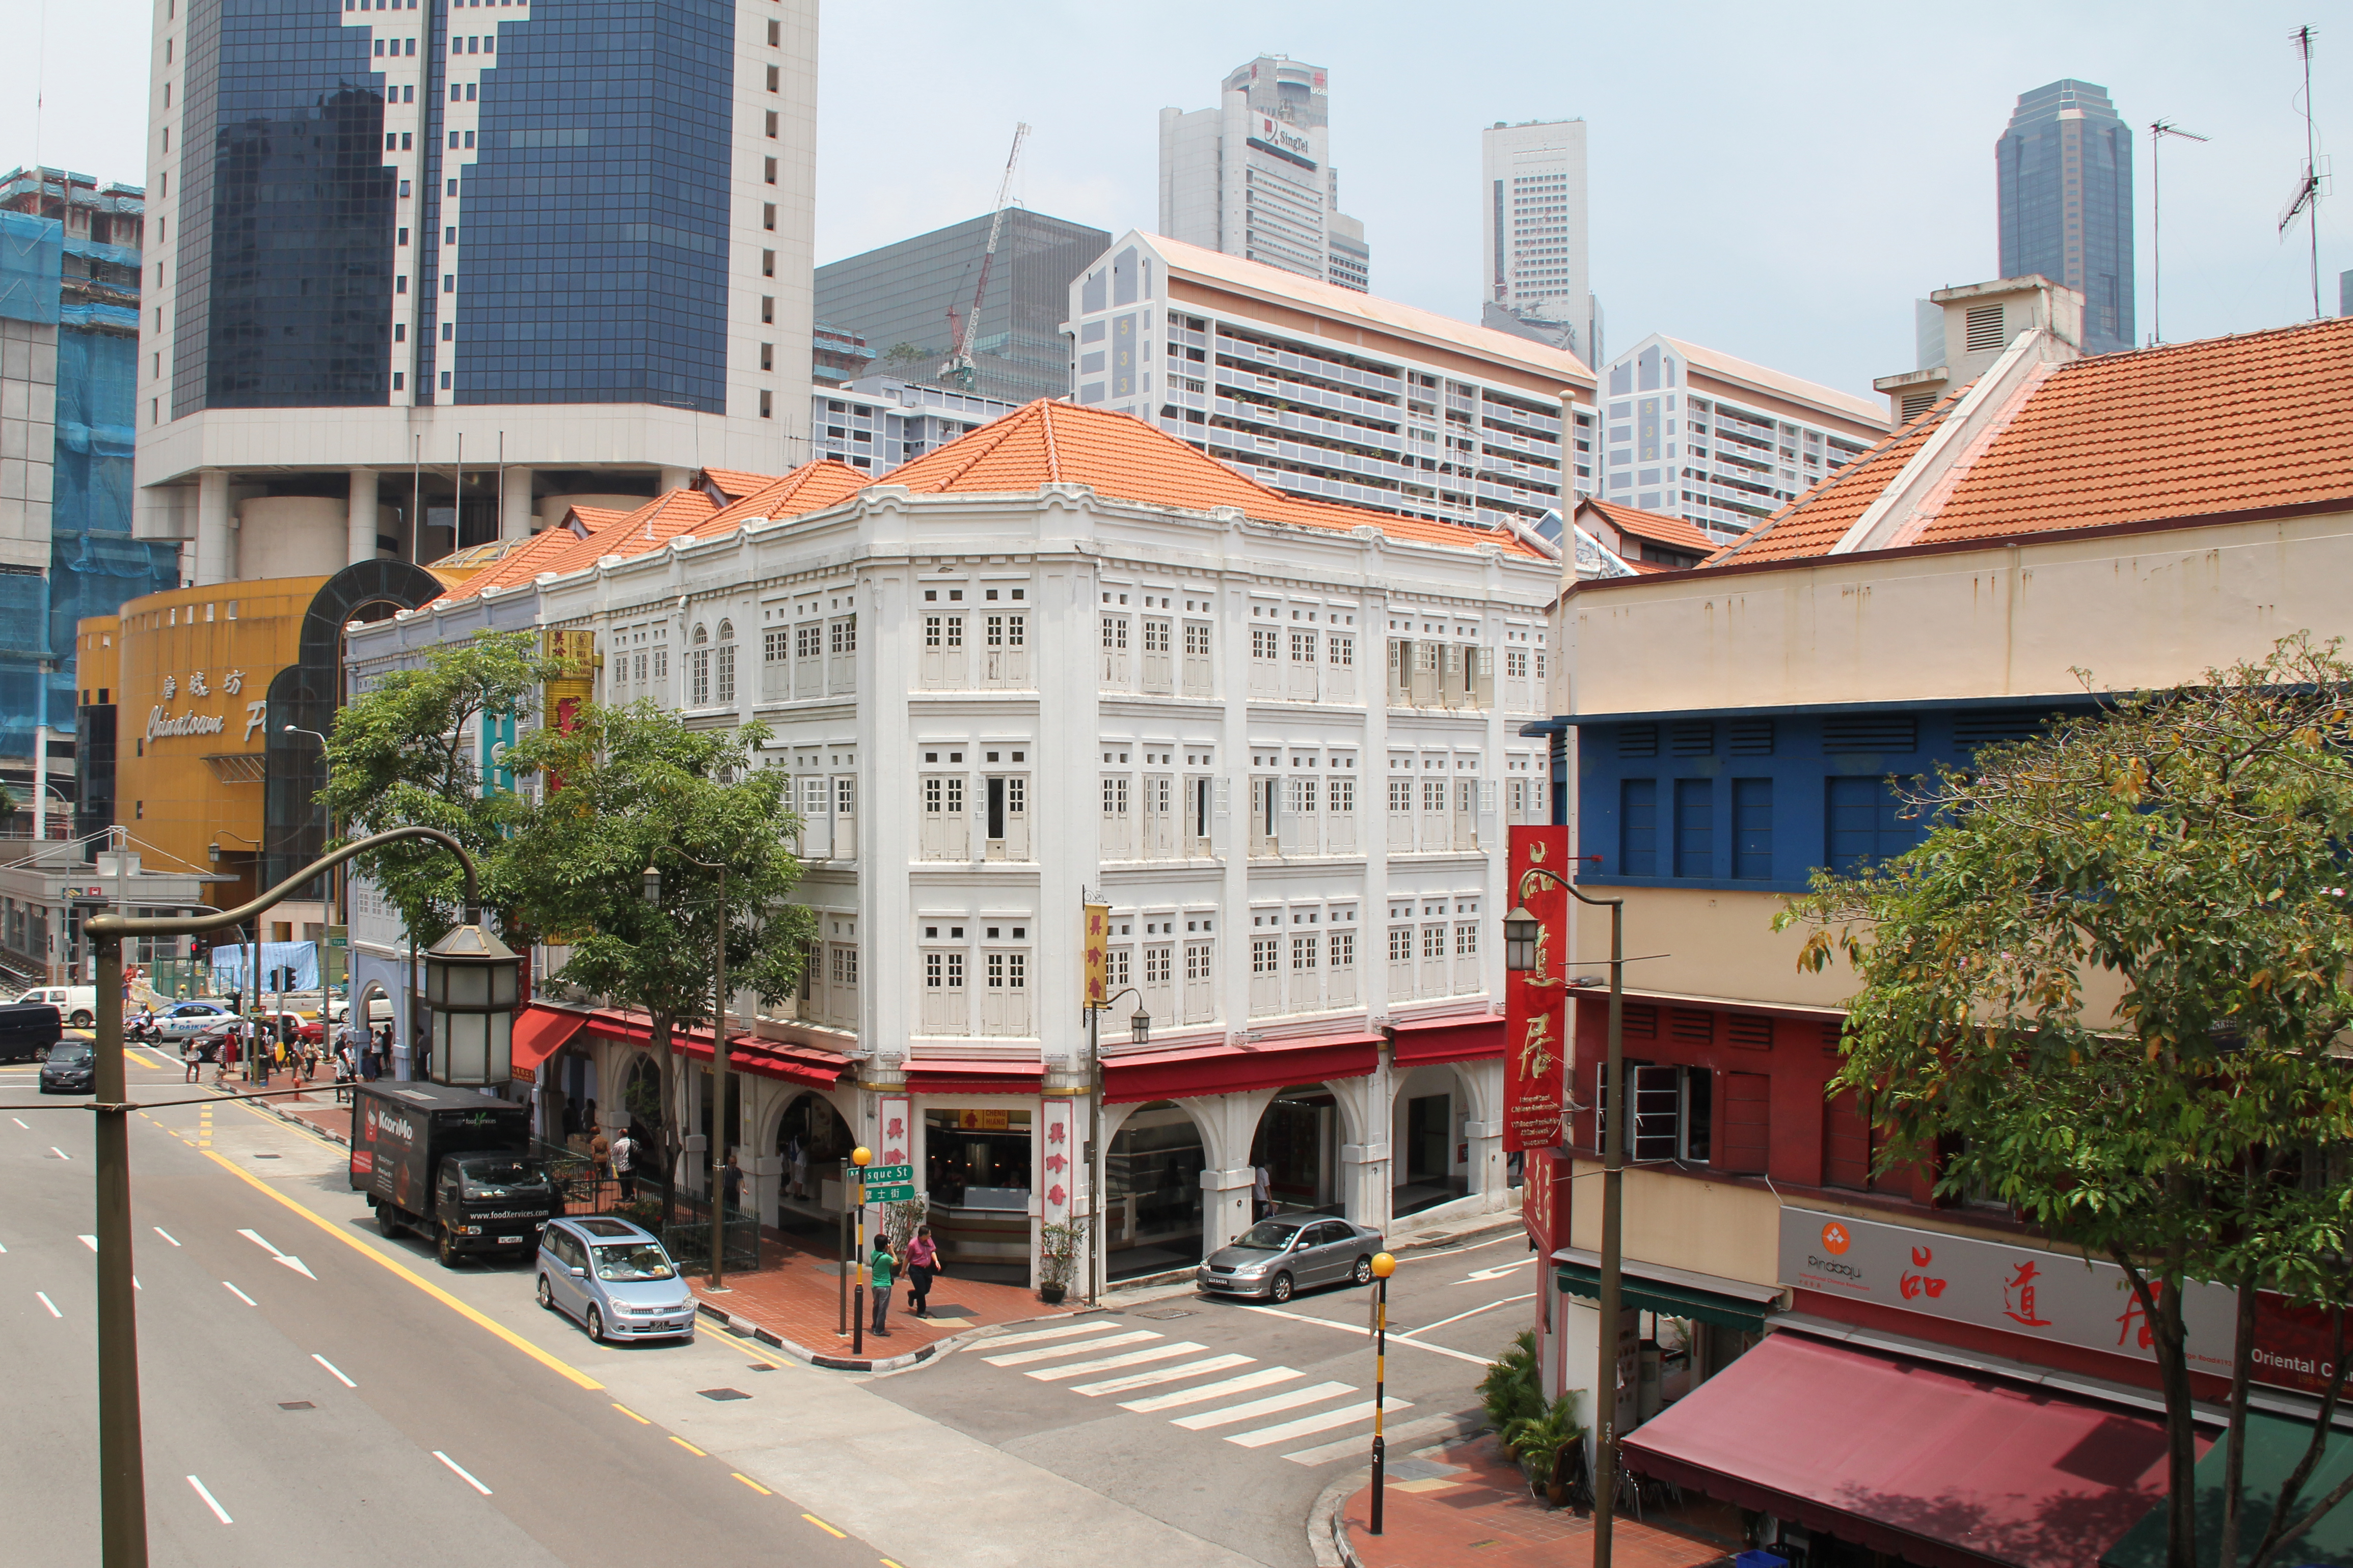 Bee Cheng Hiang Store in Chinatown, Singapore - panoramio